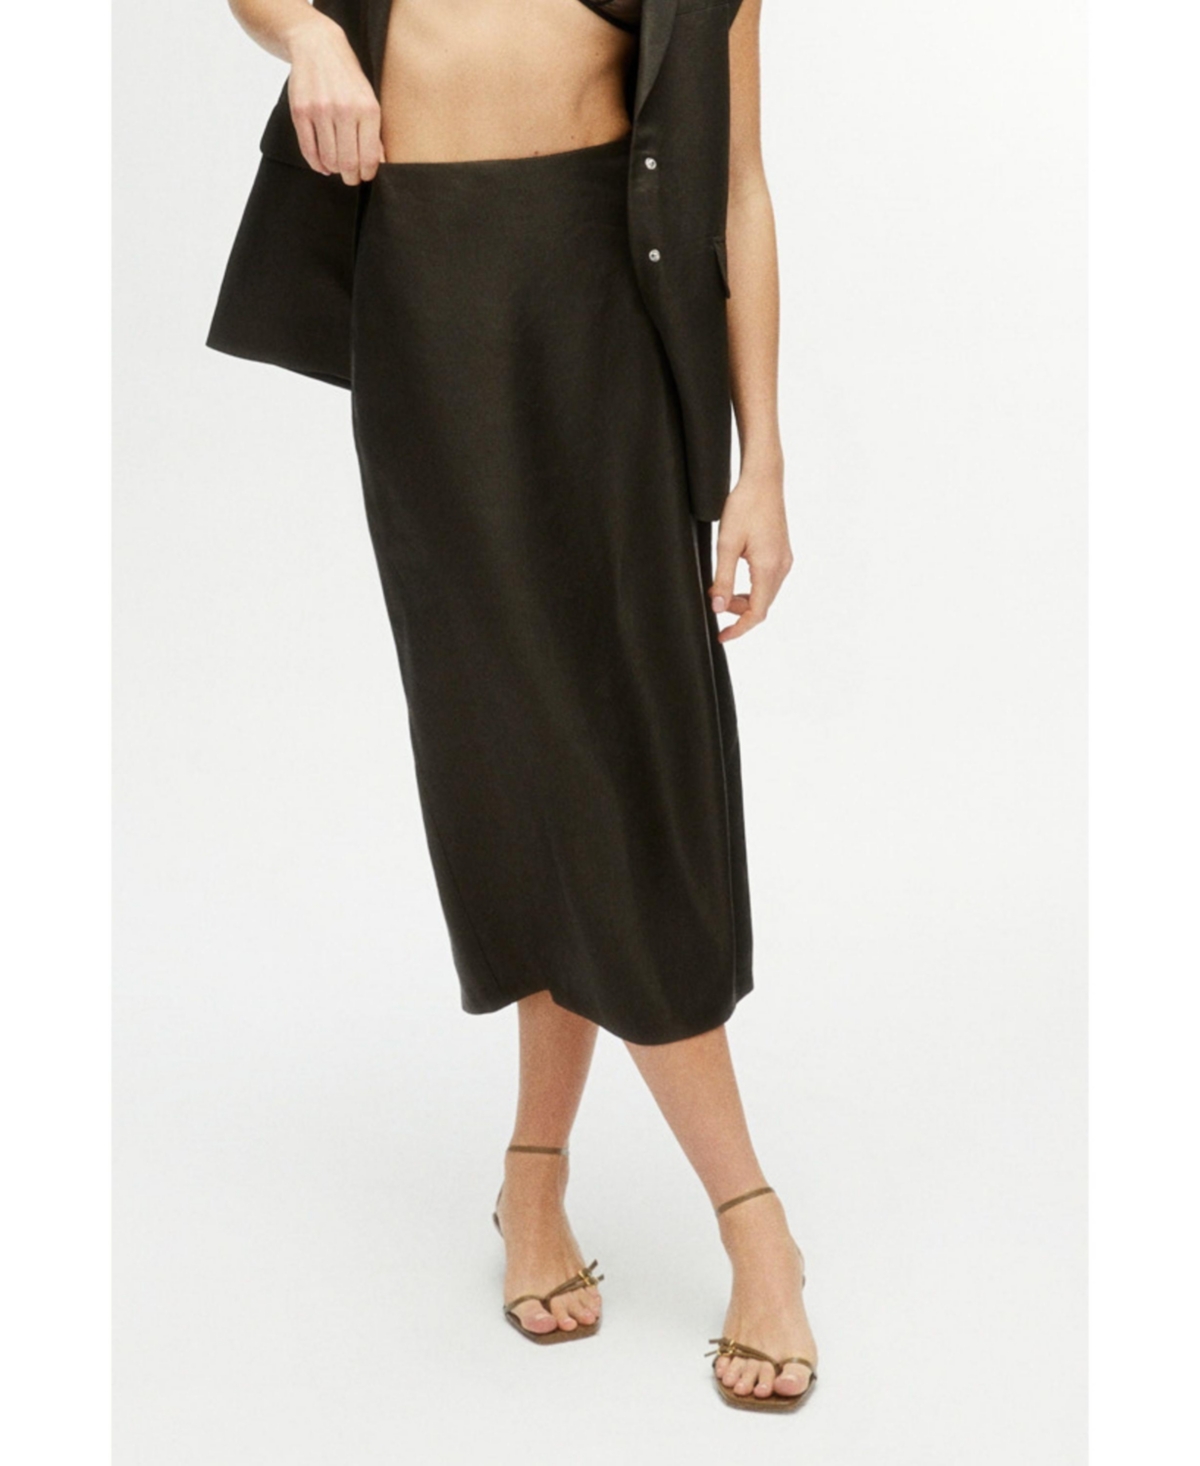 Women's Midi Skirt with Back Slits - Khaki